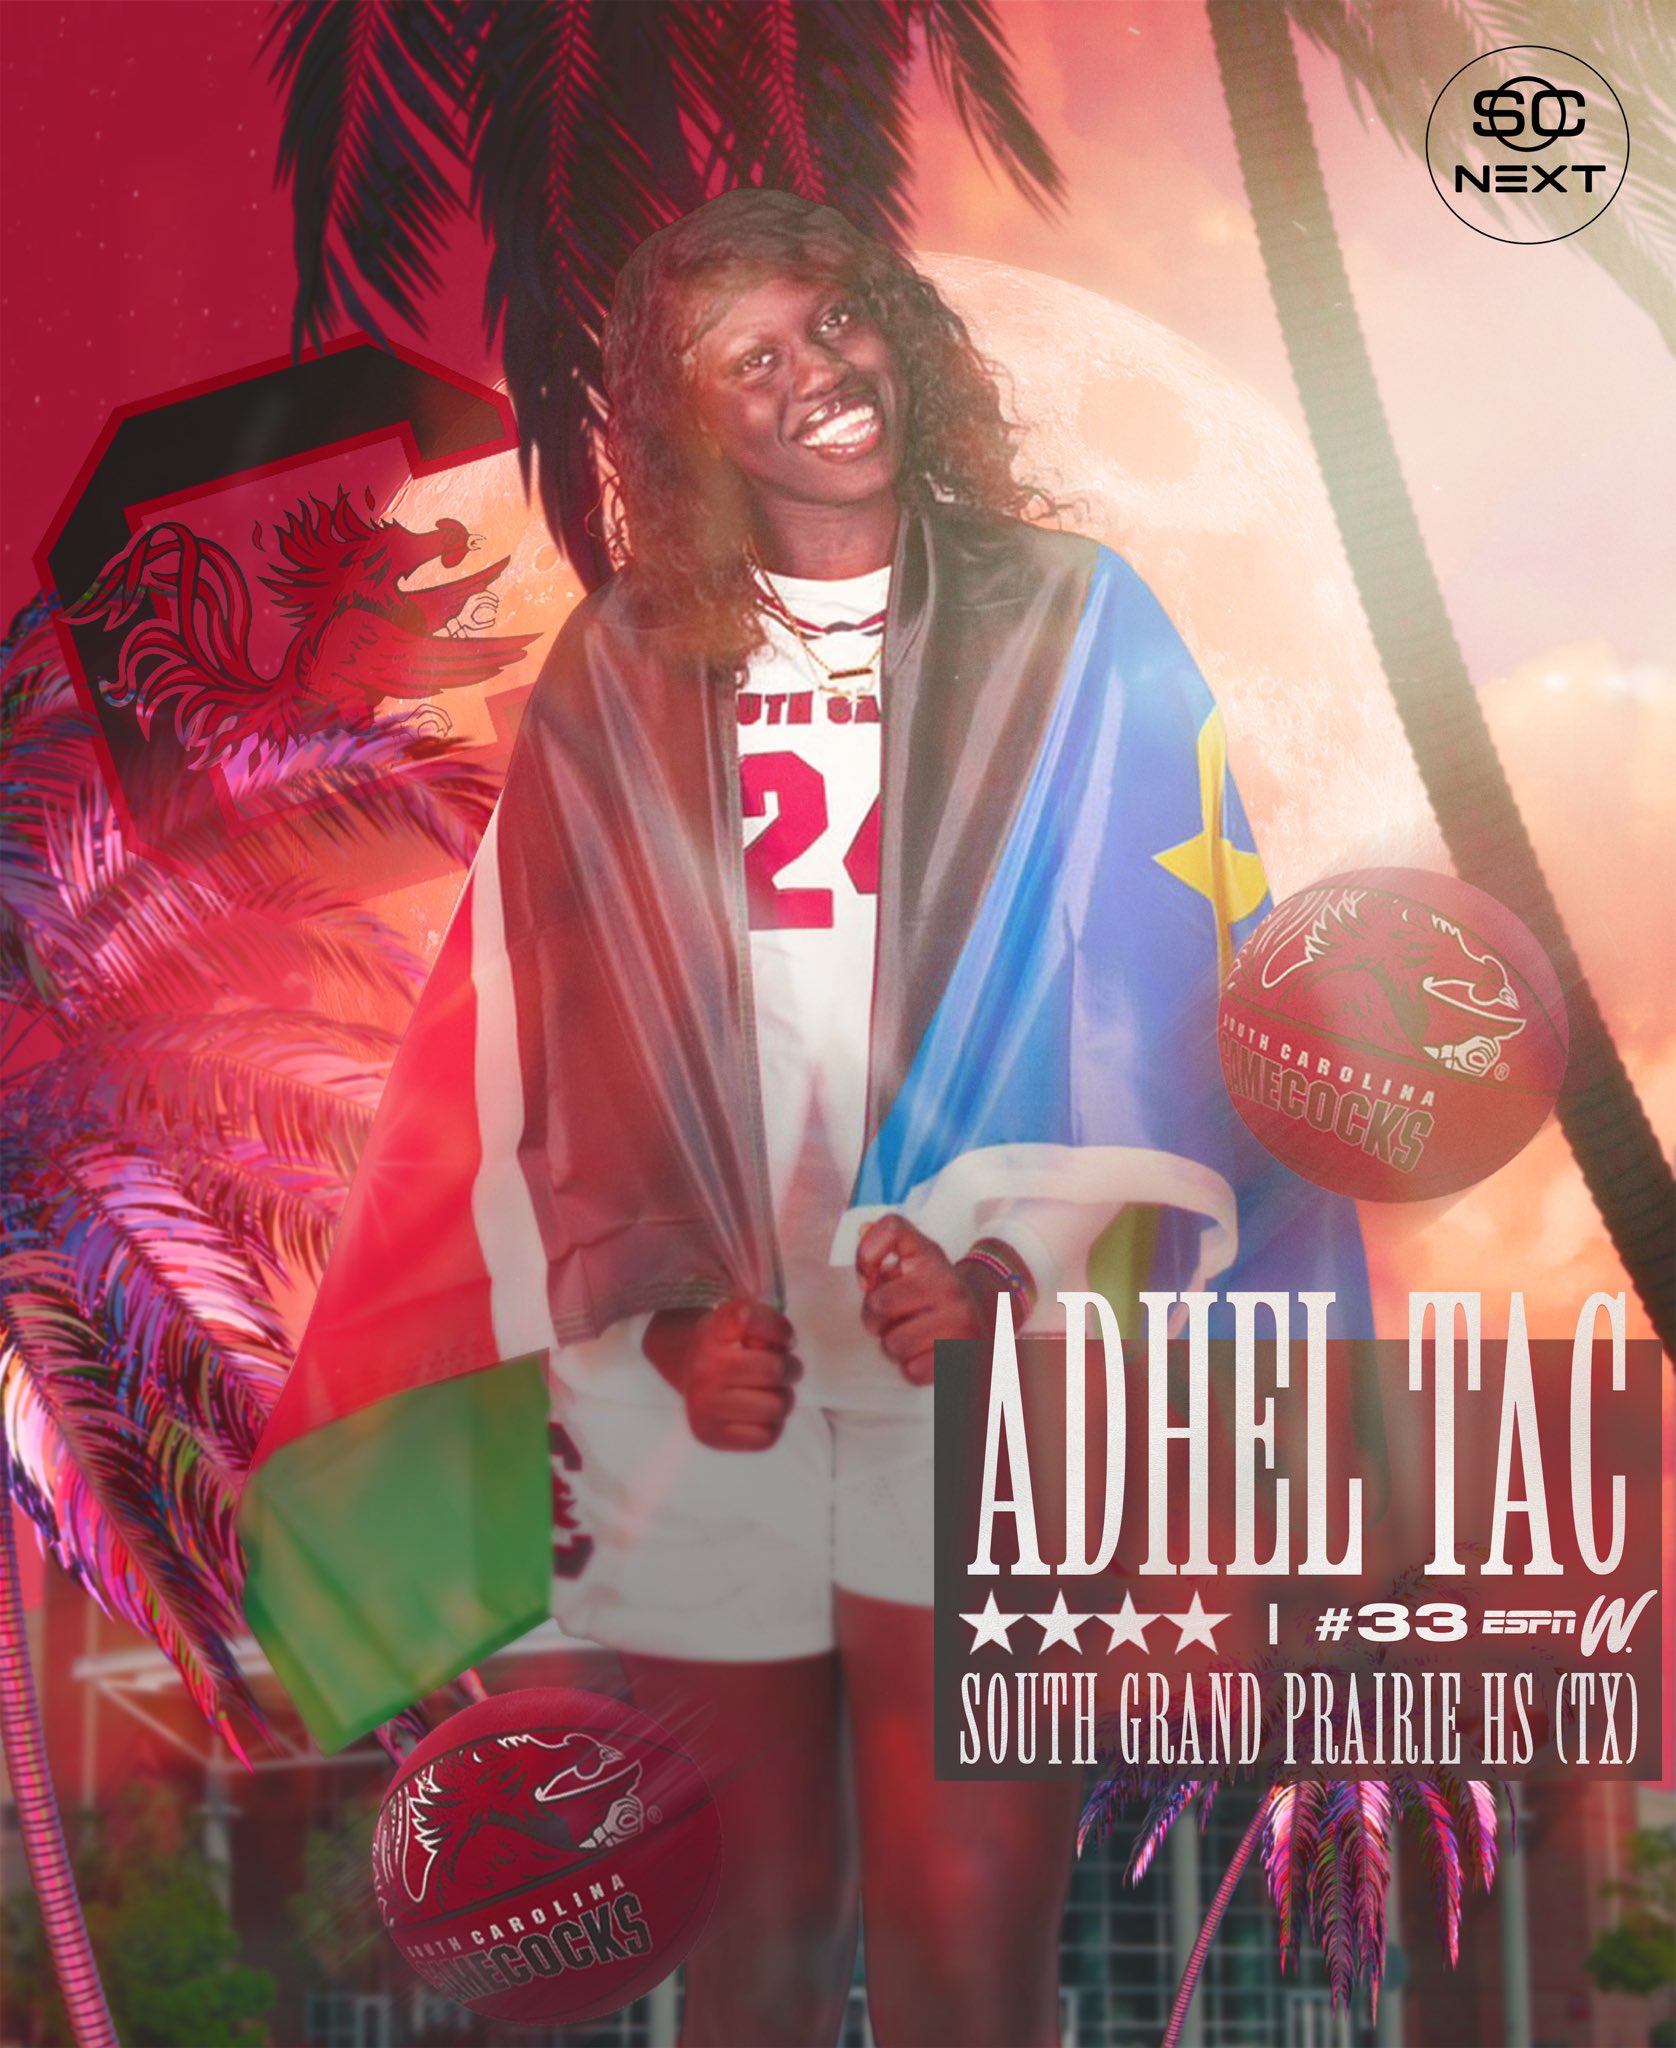 Adhel Tac commits to South Carolina women's basketball, Dawn Staley